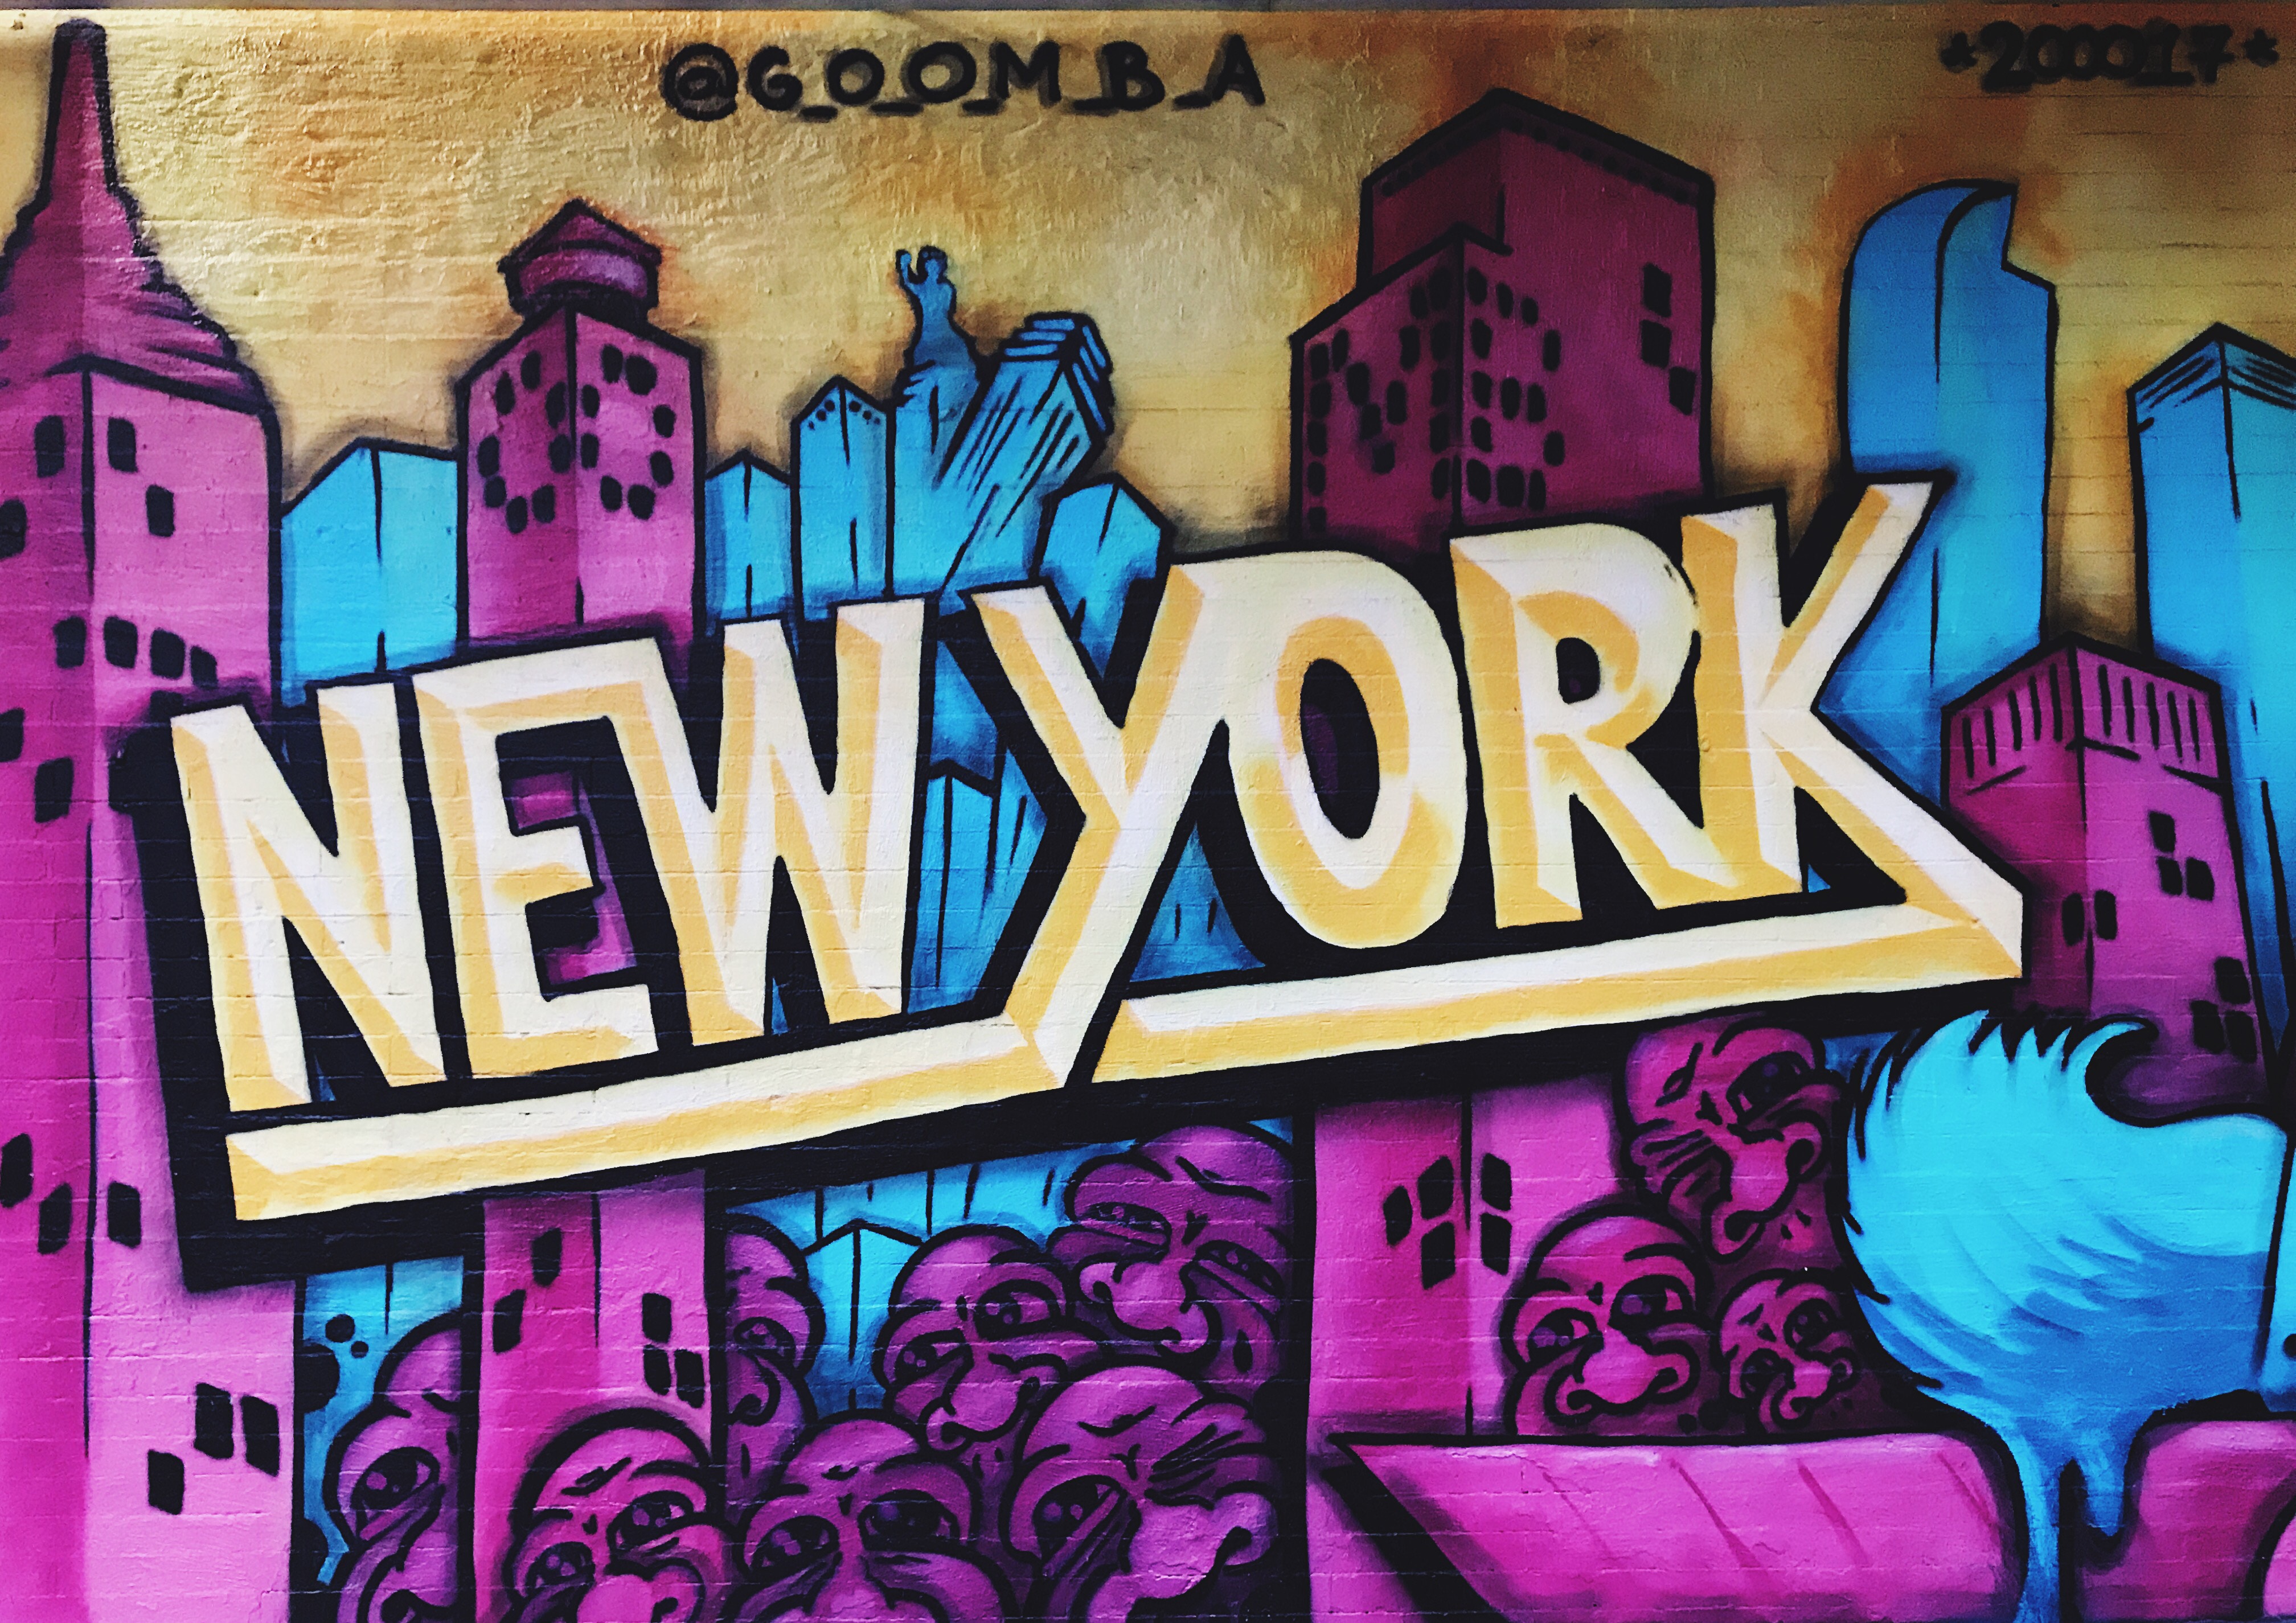 Street graffiti that says "New York"